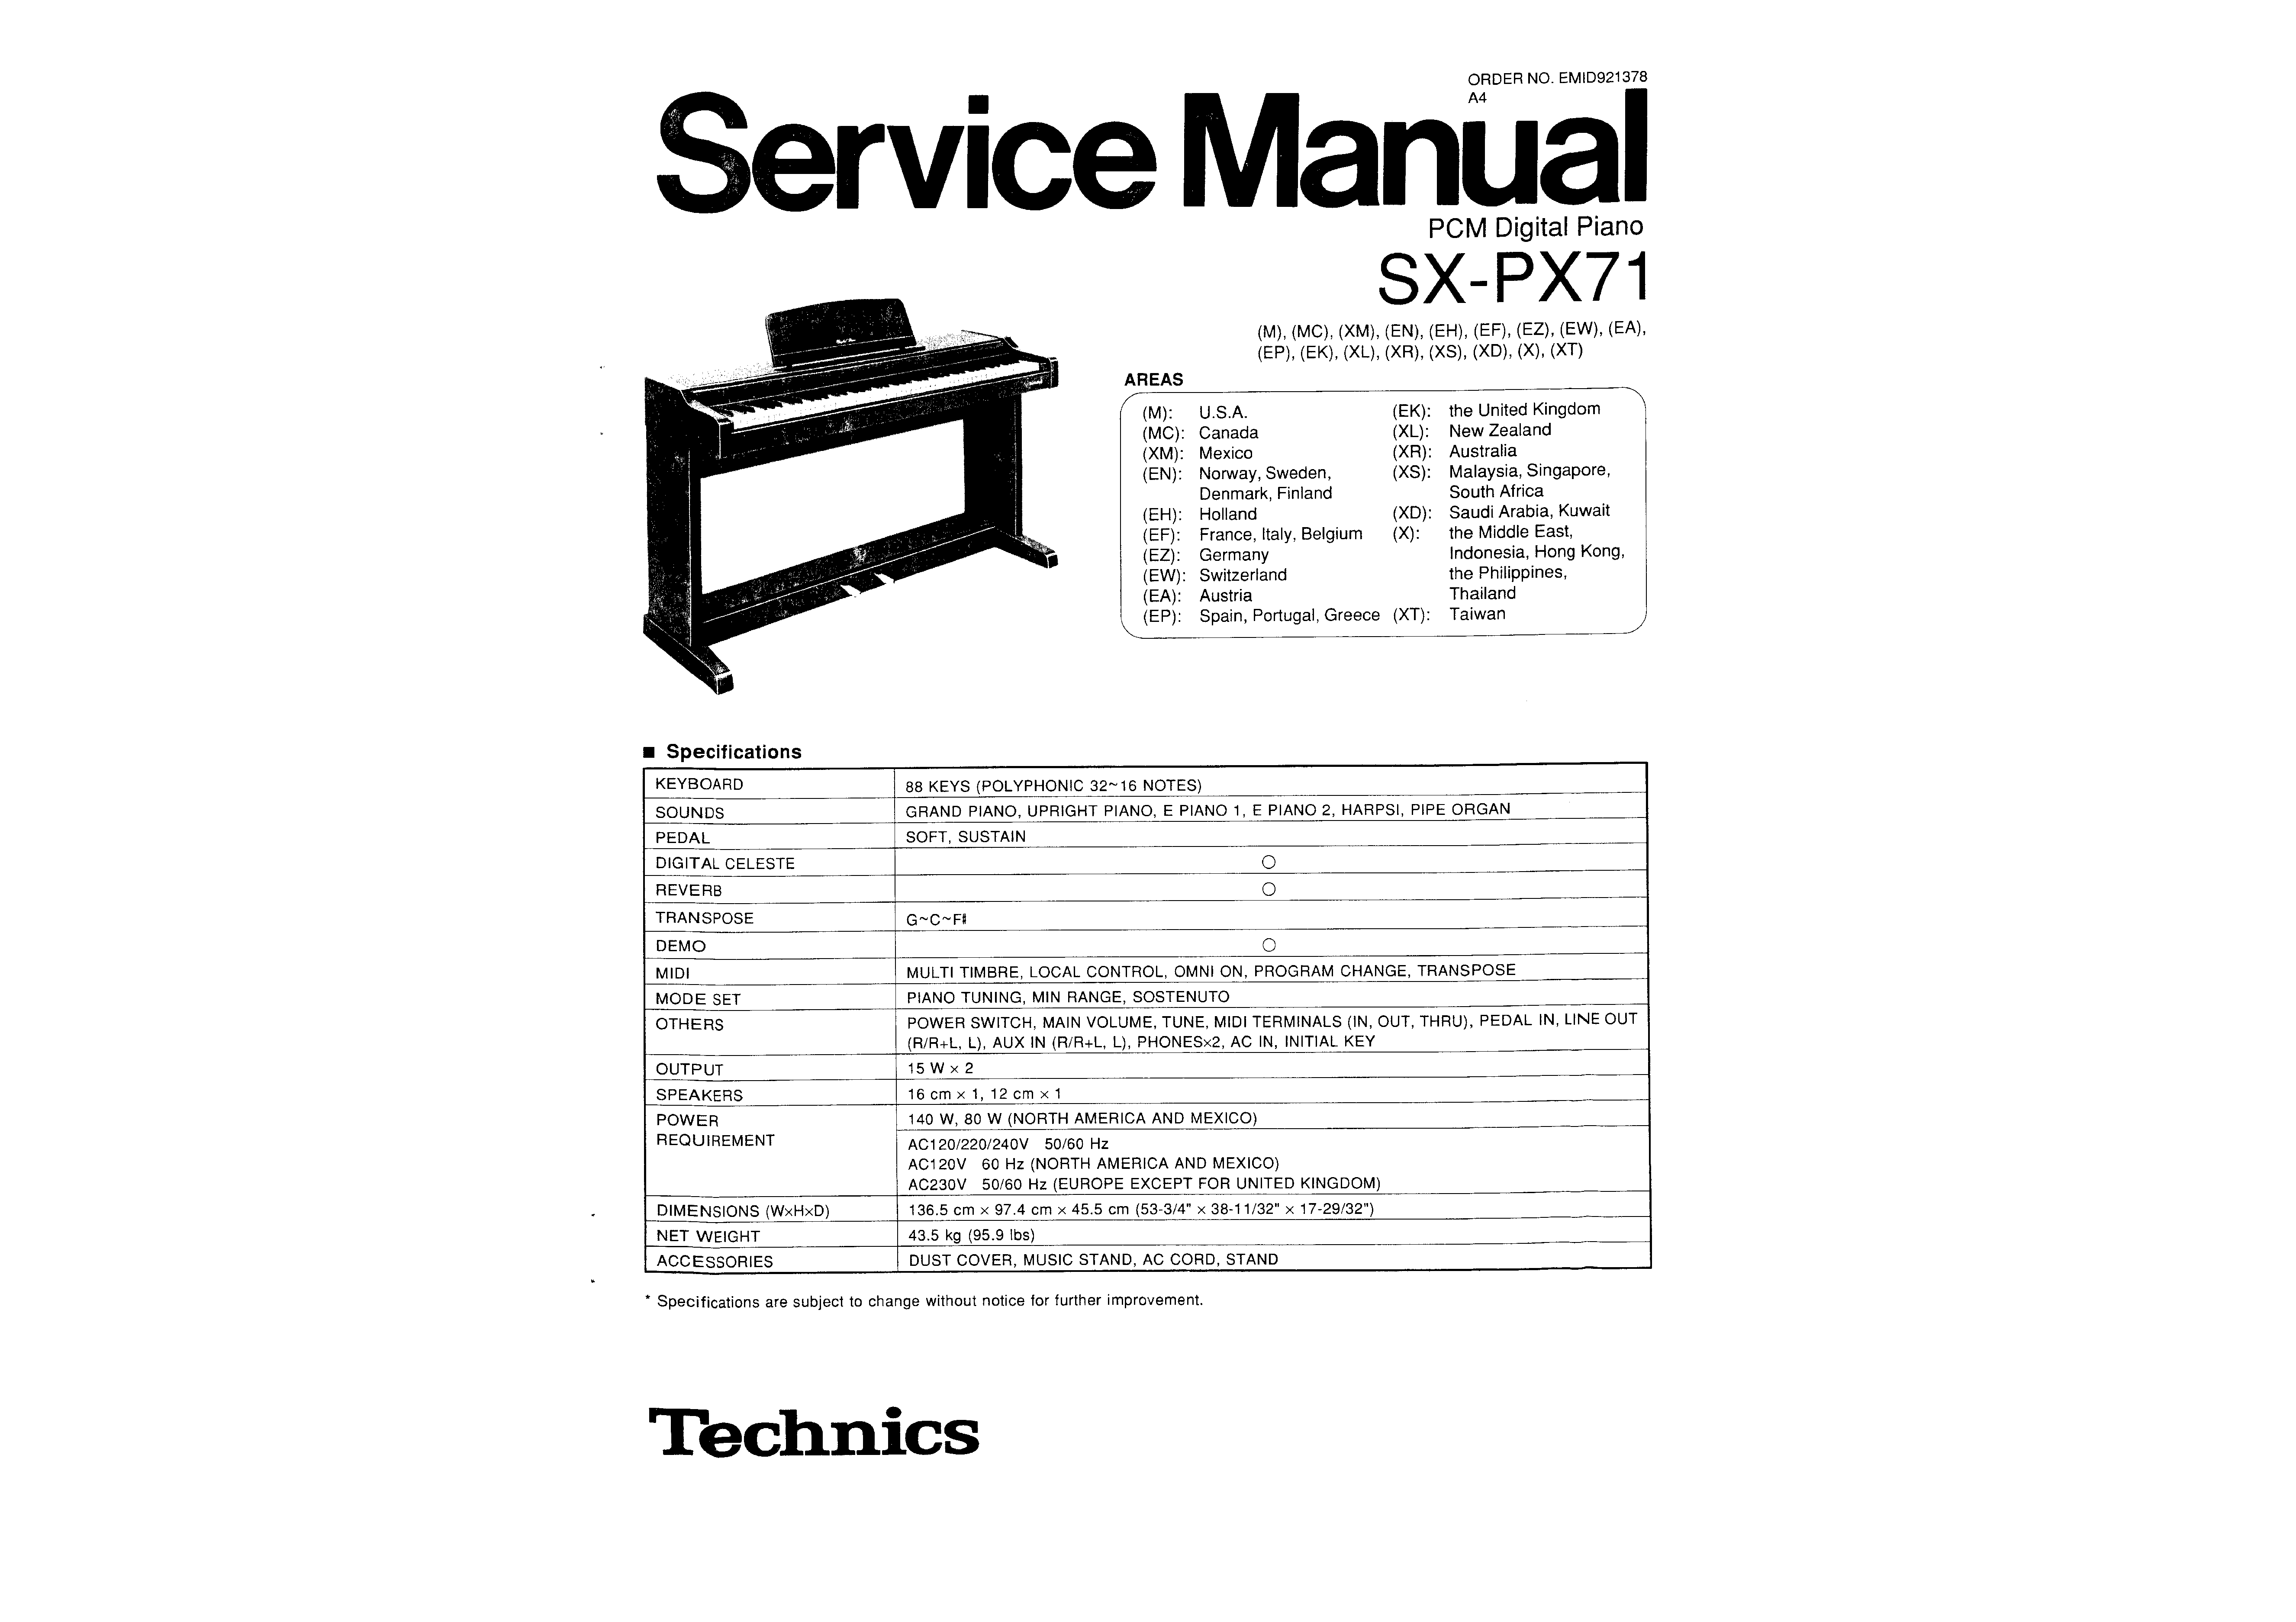 Technics sx-px manual